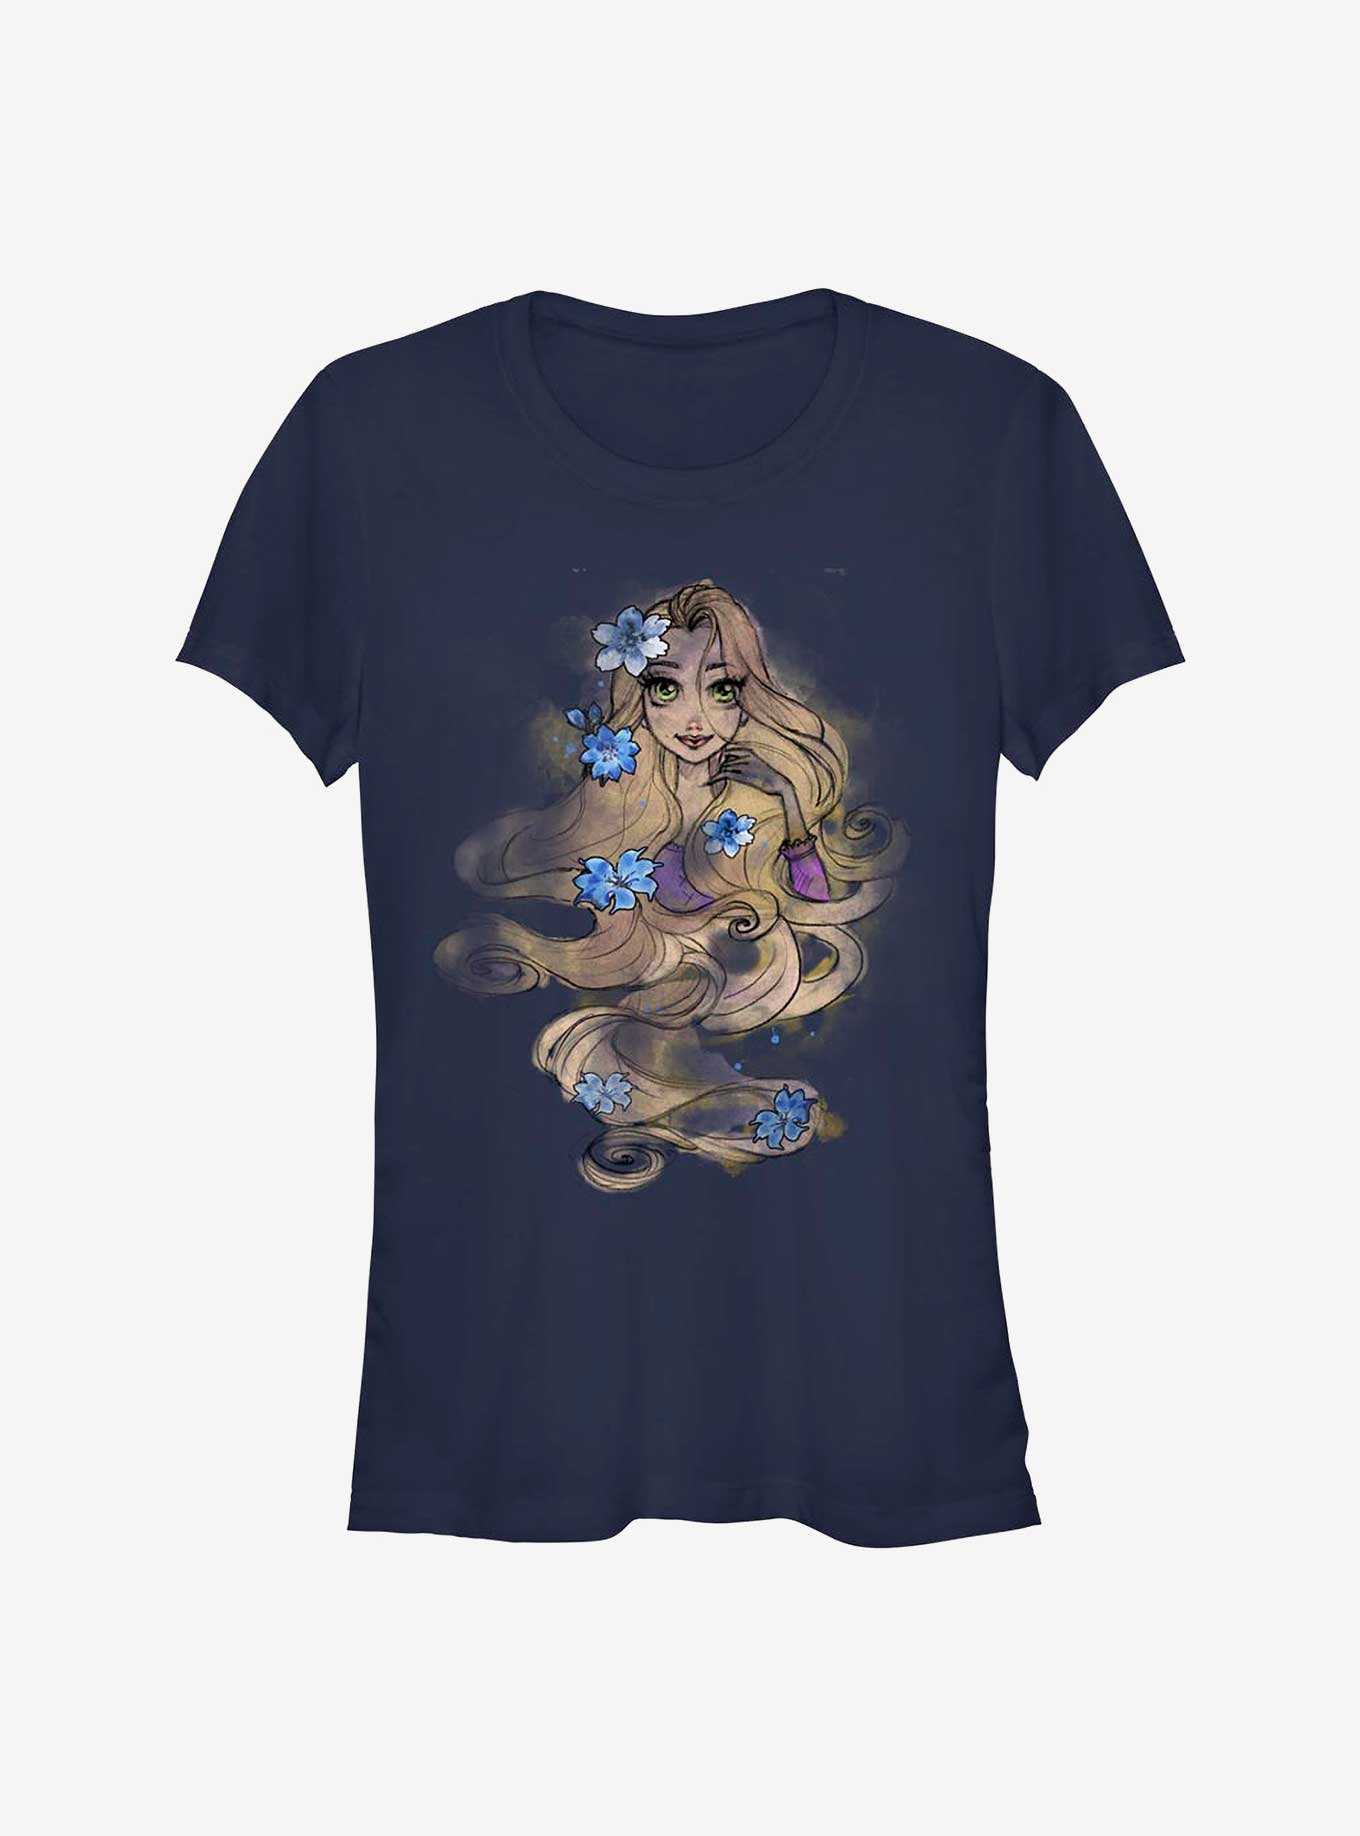 Disney Tangled Whimsical Rapunzel Girls T-Shirt, , hi-res